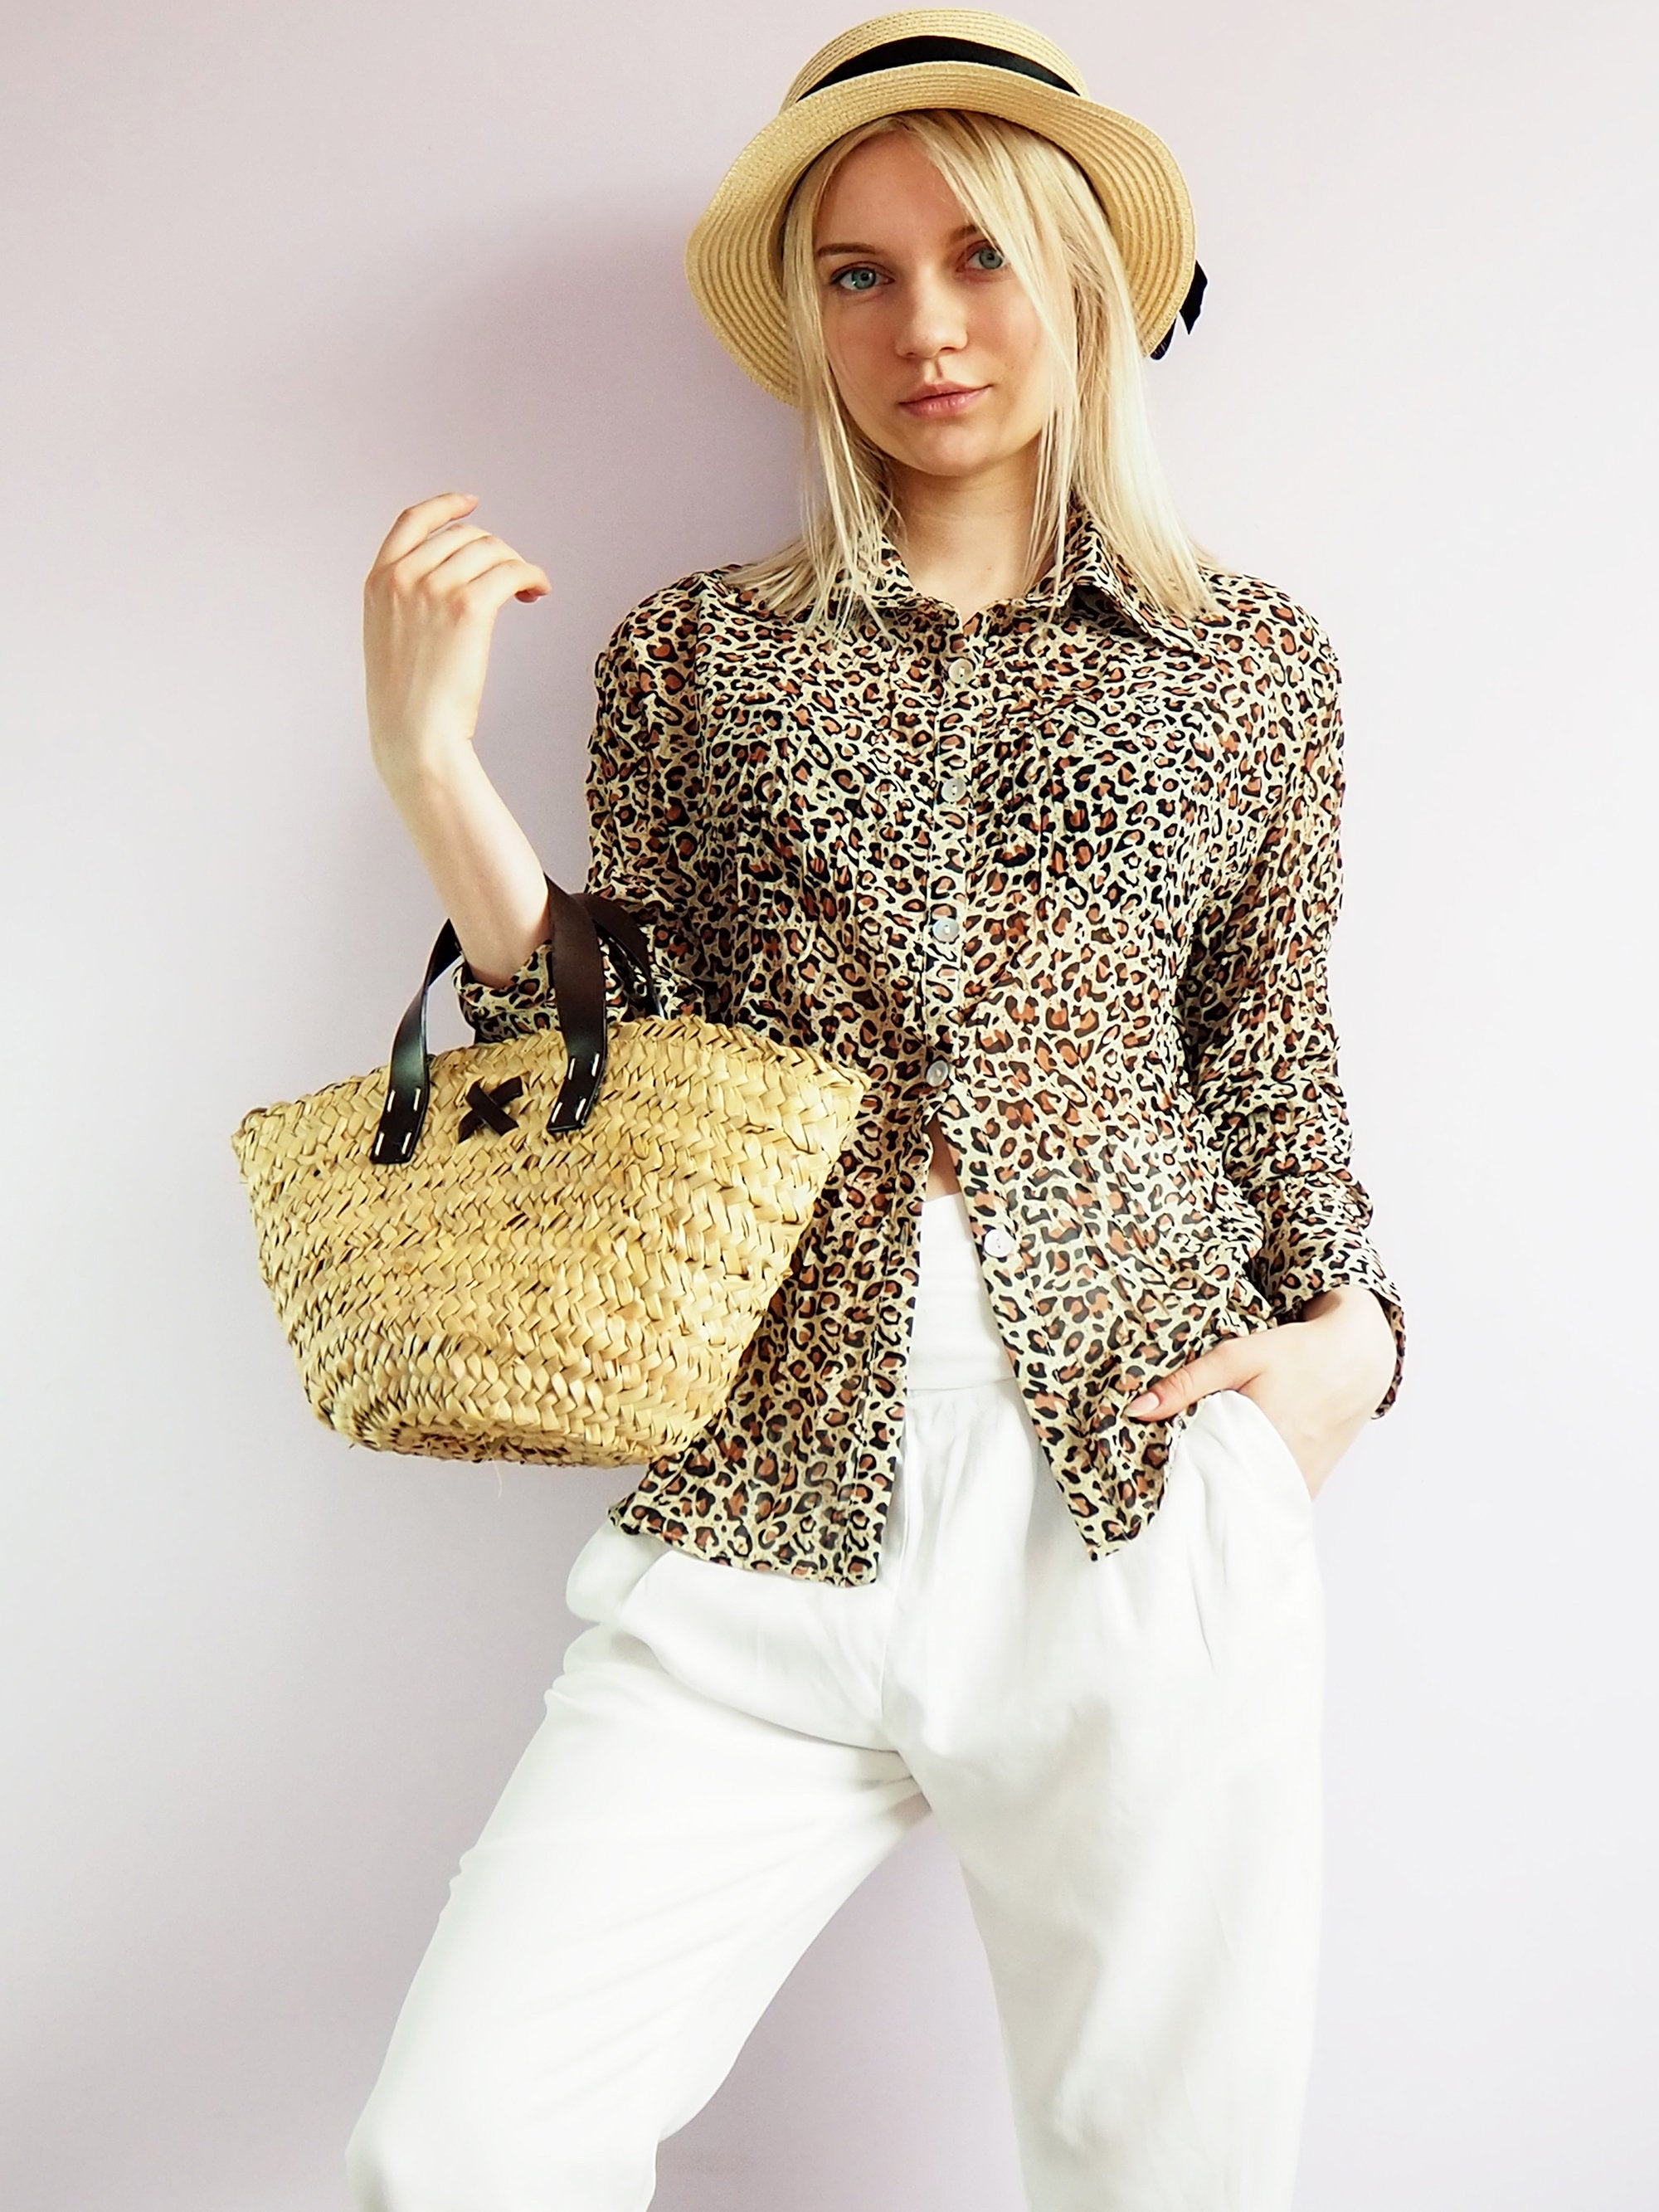 Vintage 90s animal leopard print blouse shirt top